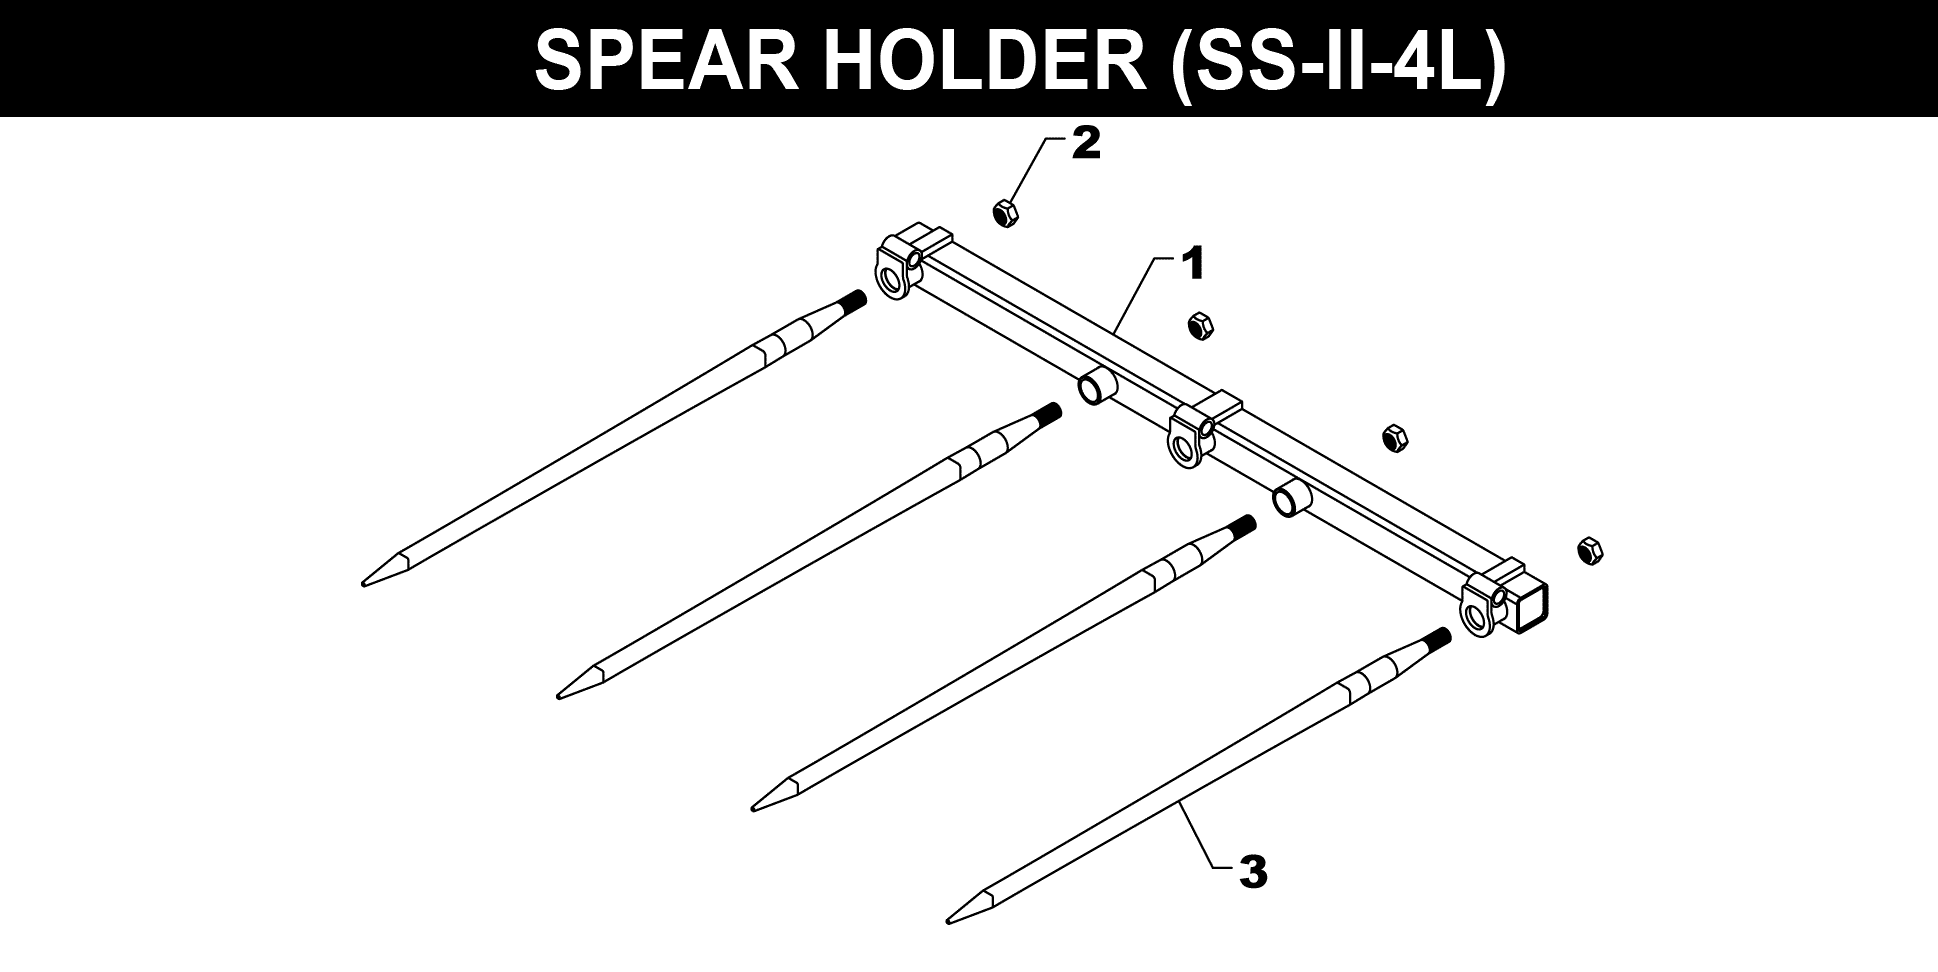 SS-II-4L Spear Holder